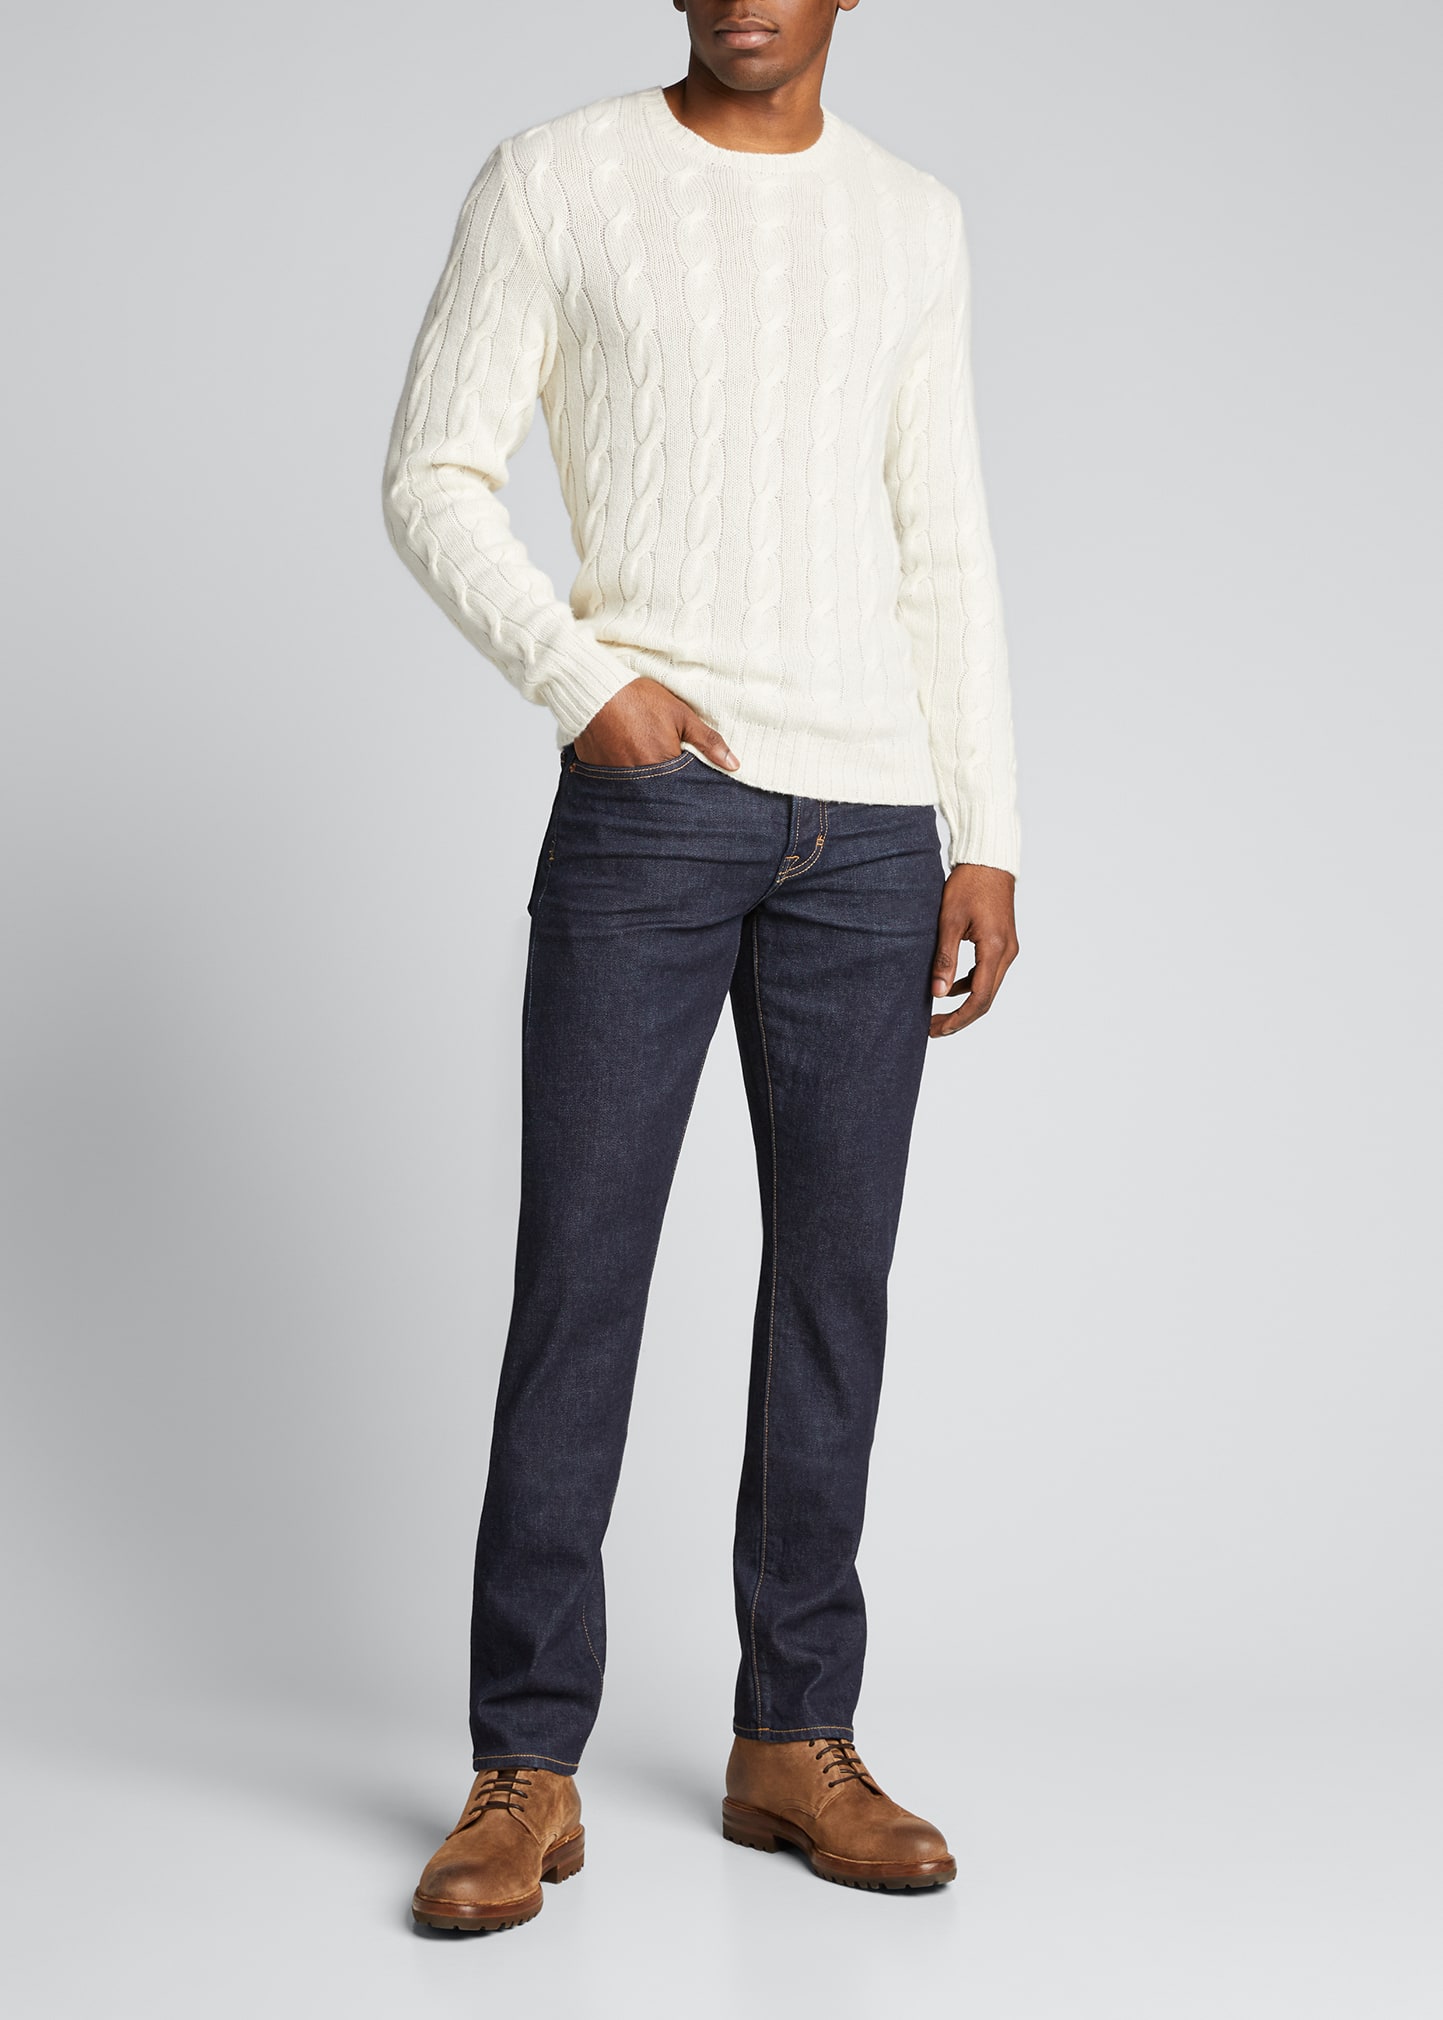 Cashmere Cable-Knit Crewneck Sweater, Cream